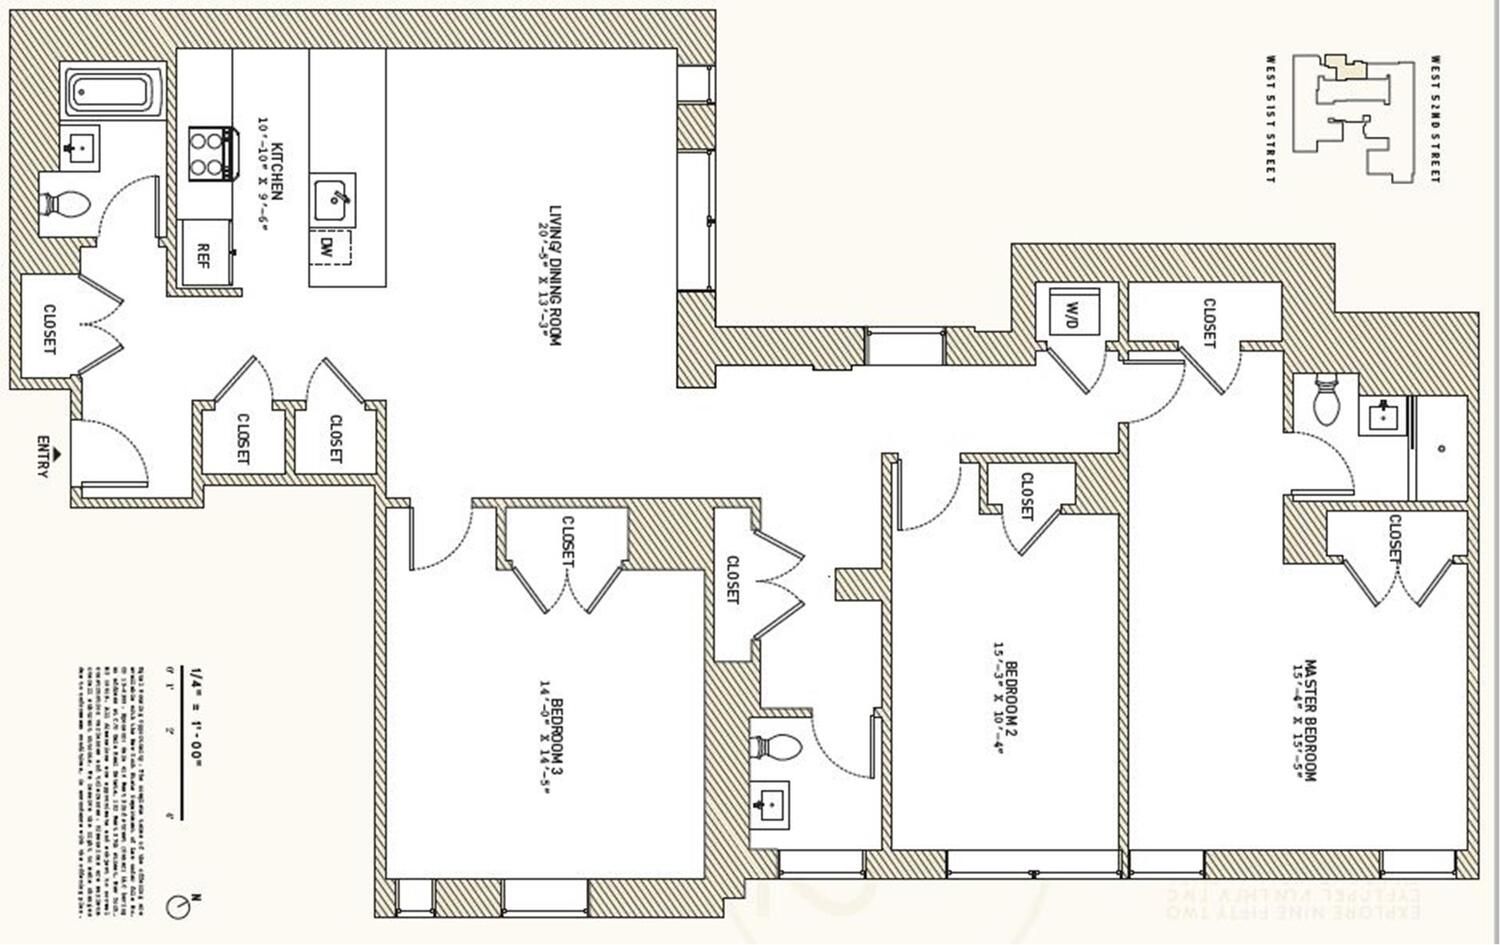 Floorplan for 416 West 52nd Street, 312